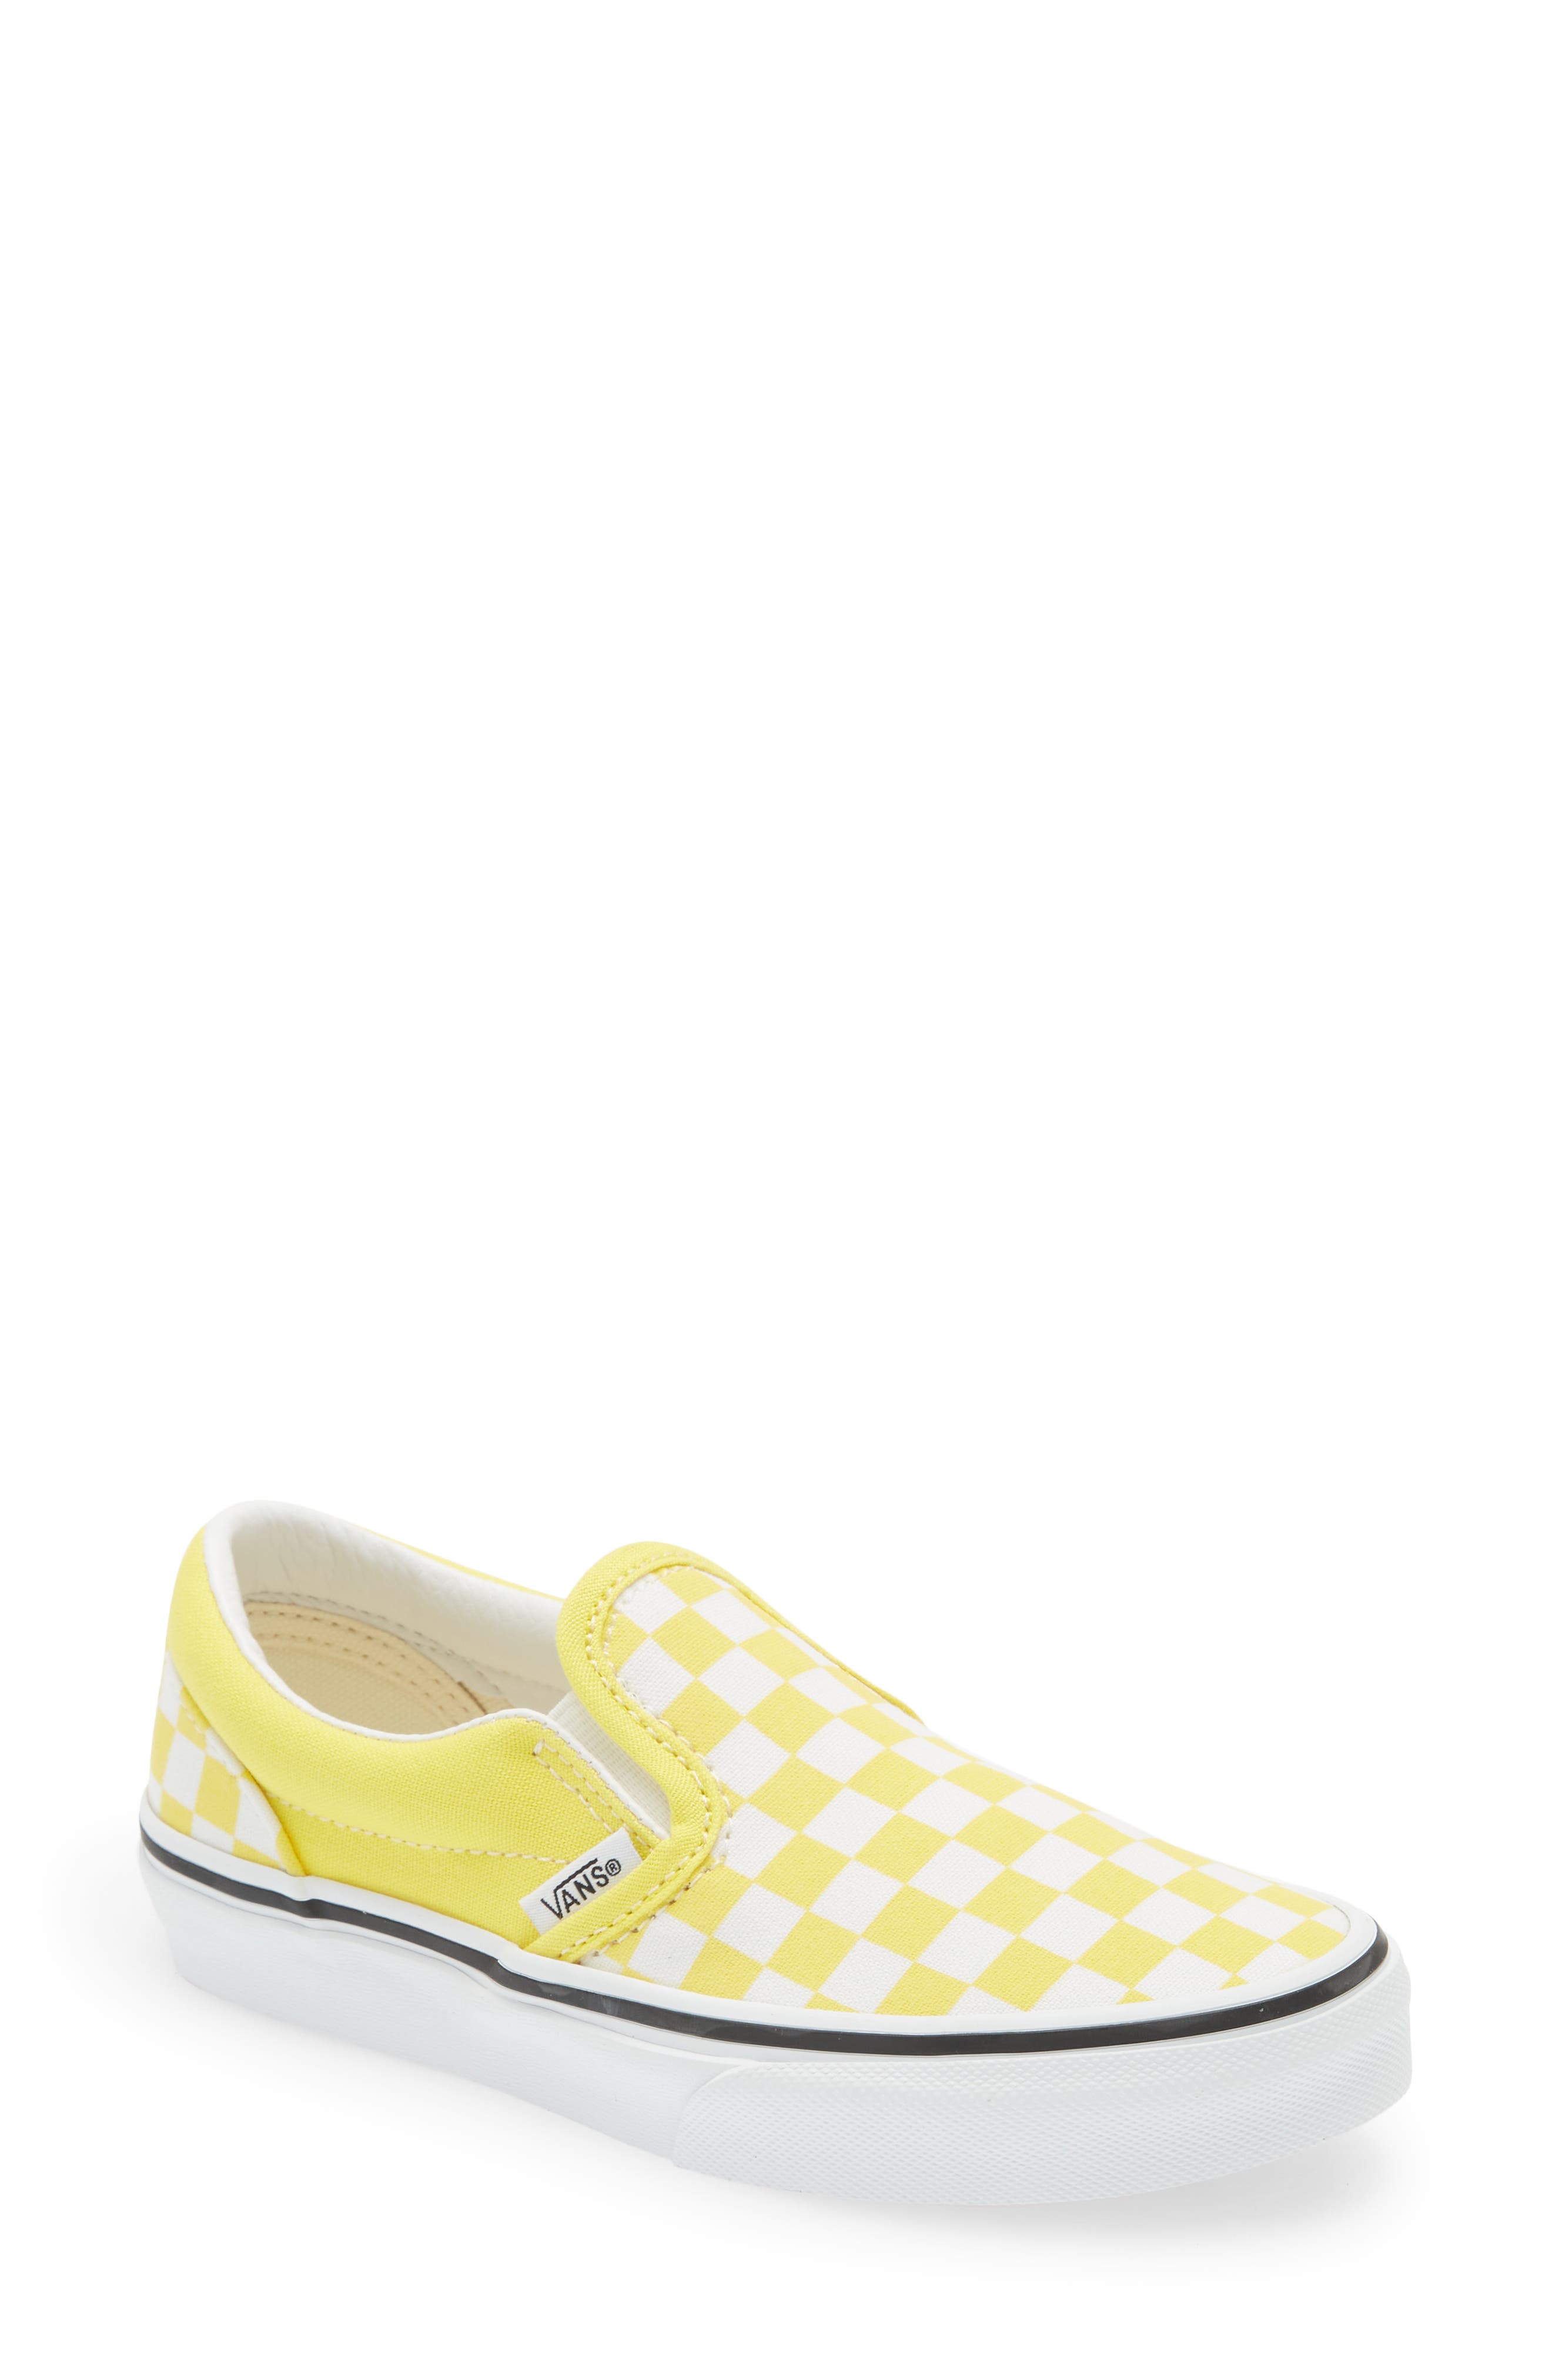 Vans Classic Slip-On Shoe in Checkerboard Yellow/True Whit